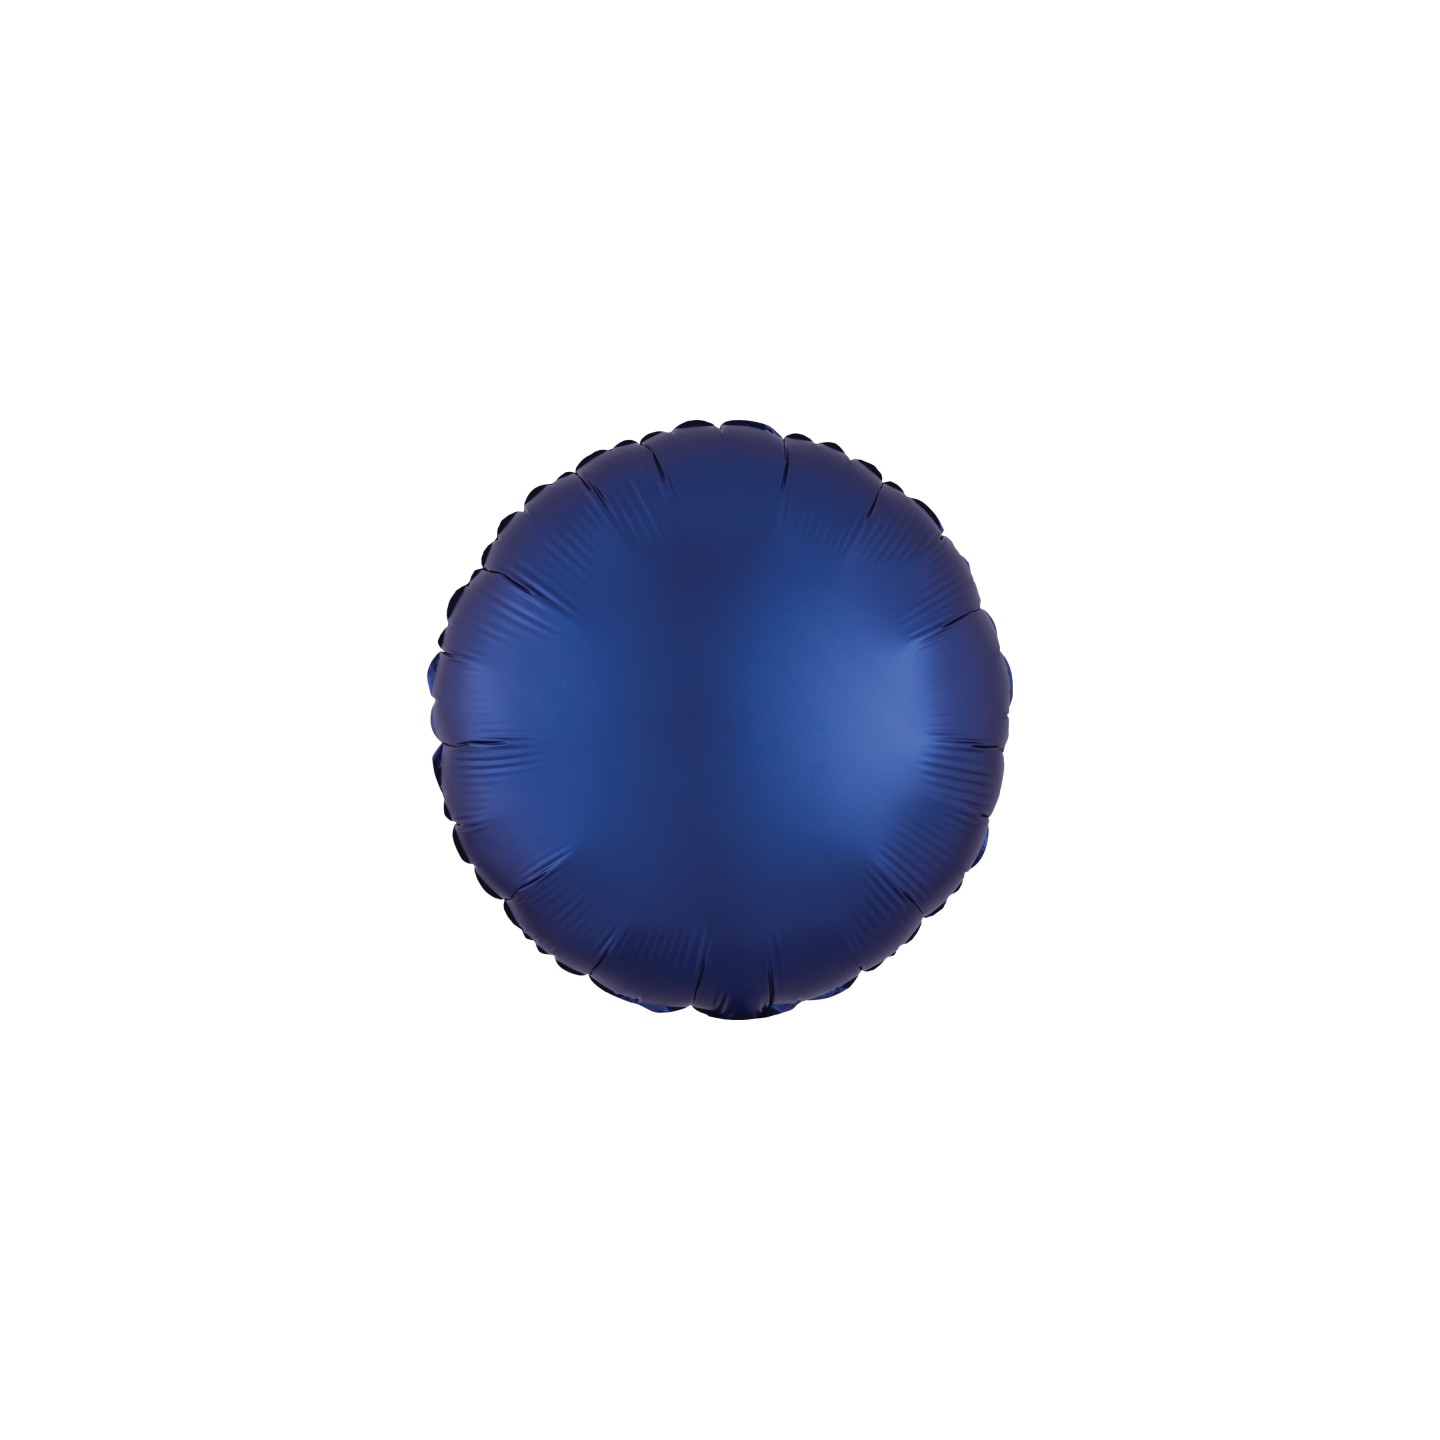 Folie ballon rond navy blauw onbedrukt folieballon